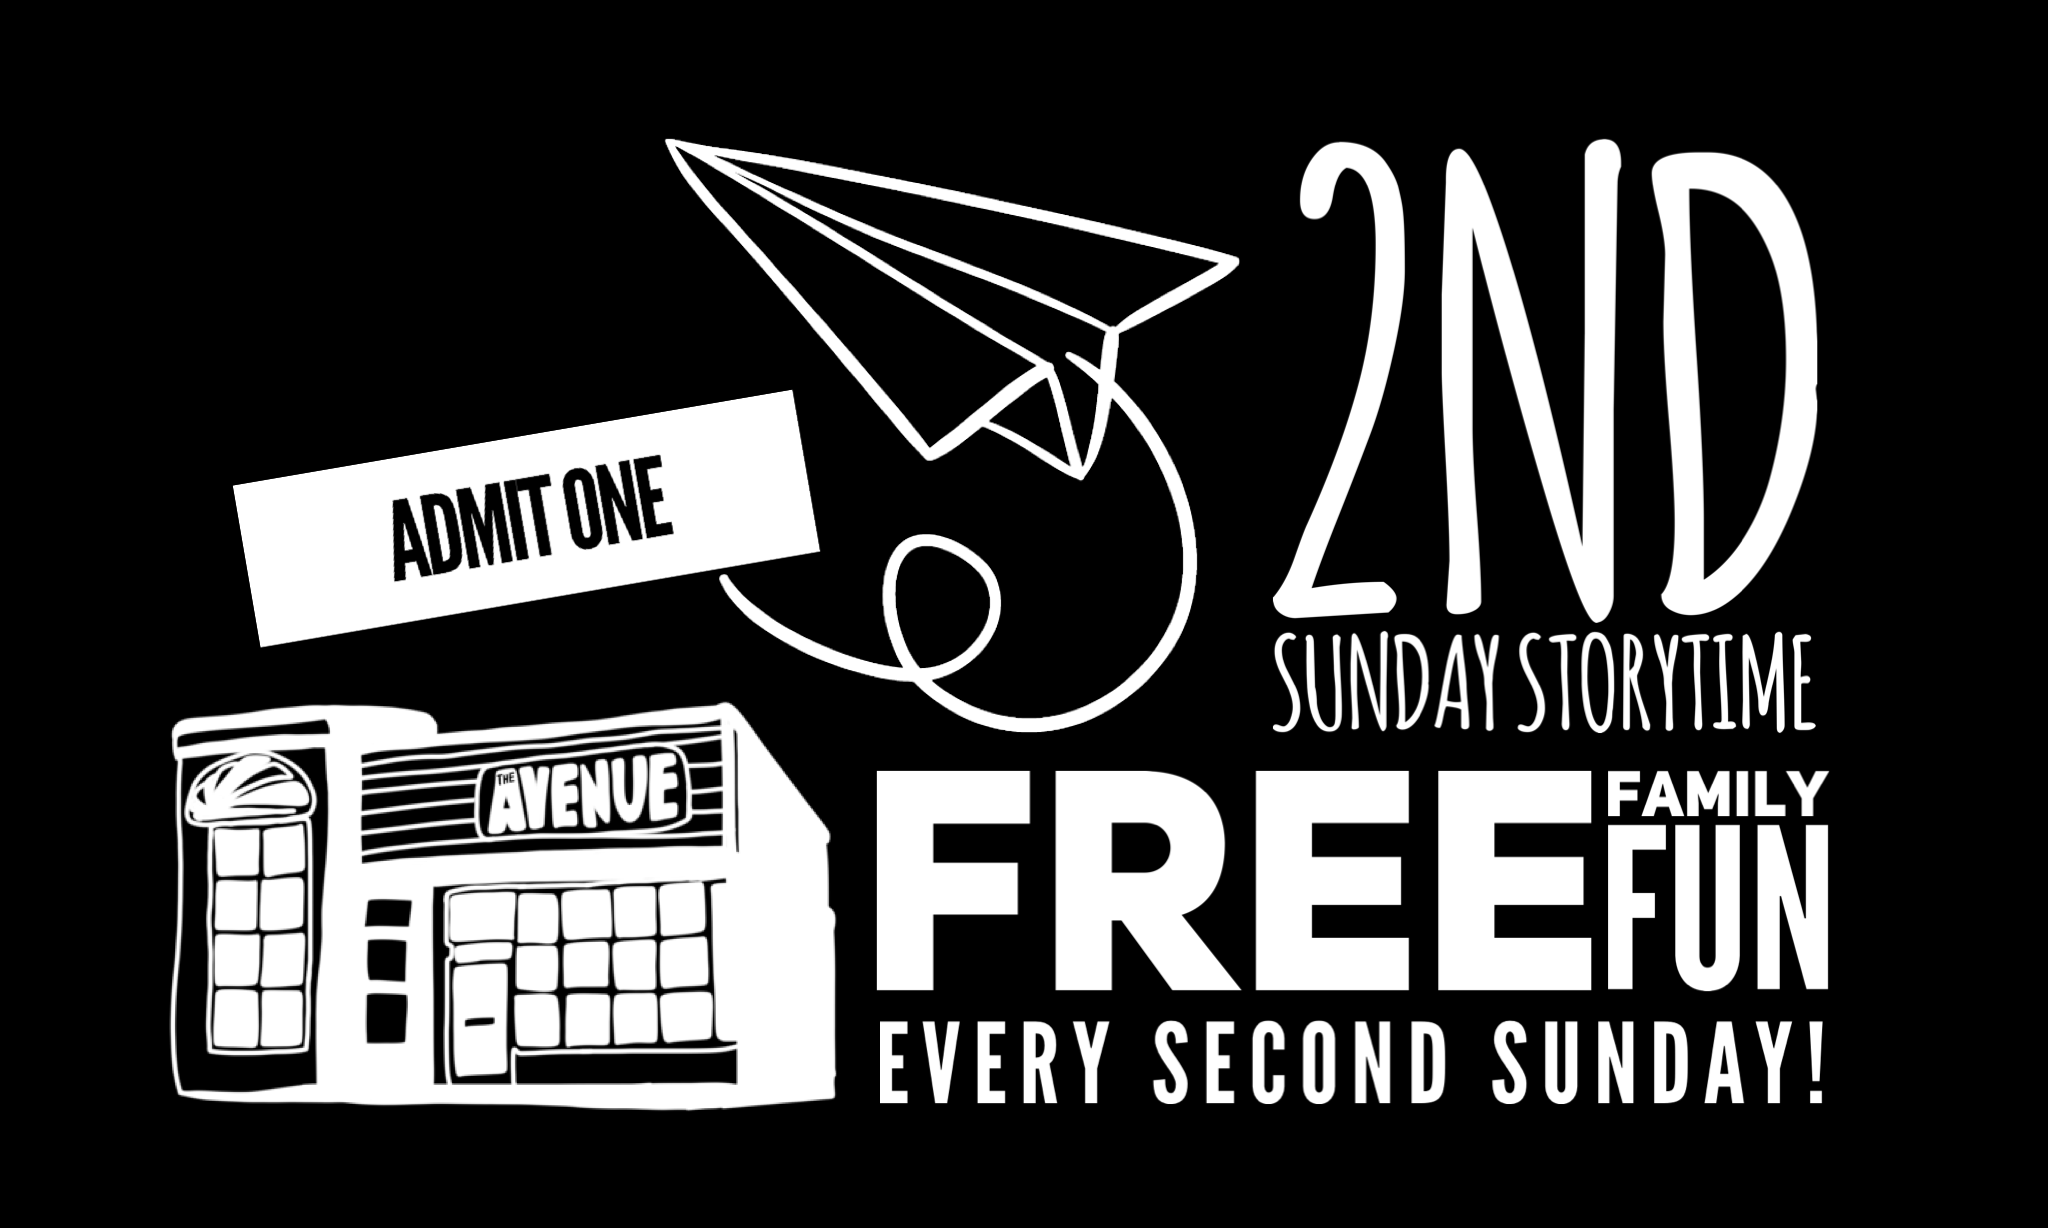 2nd Sunday Storytime @ The Avenue